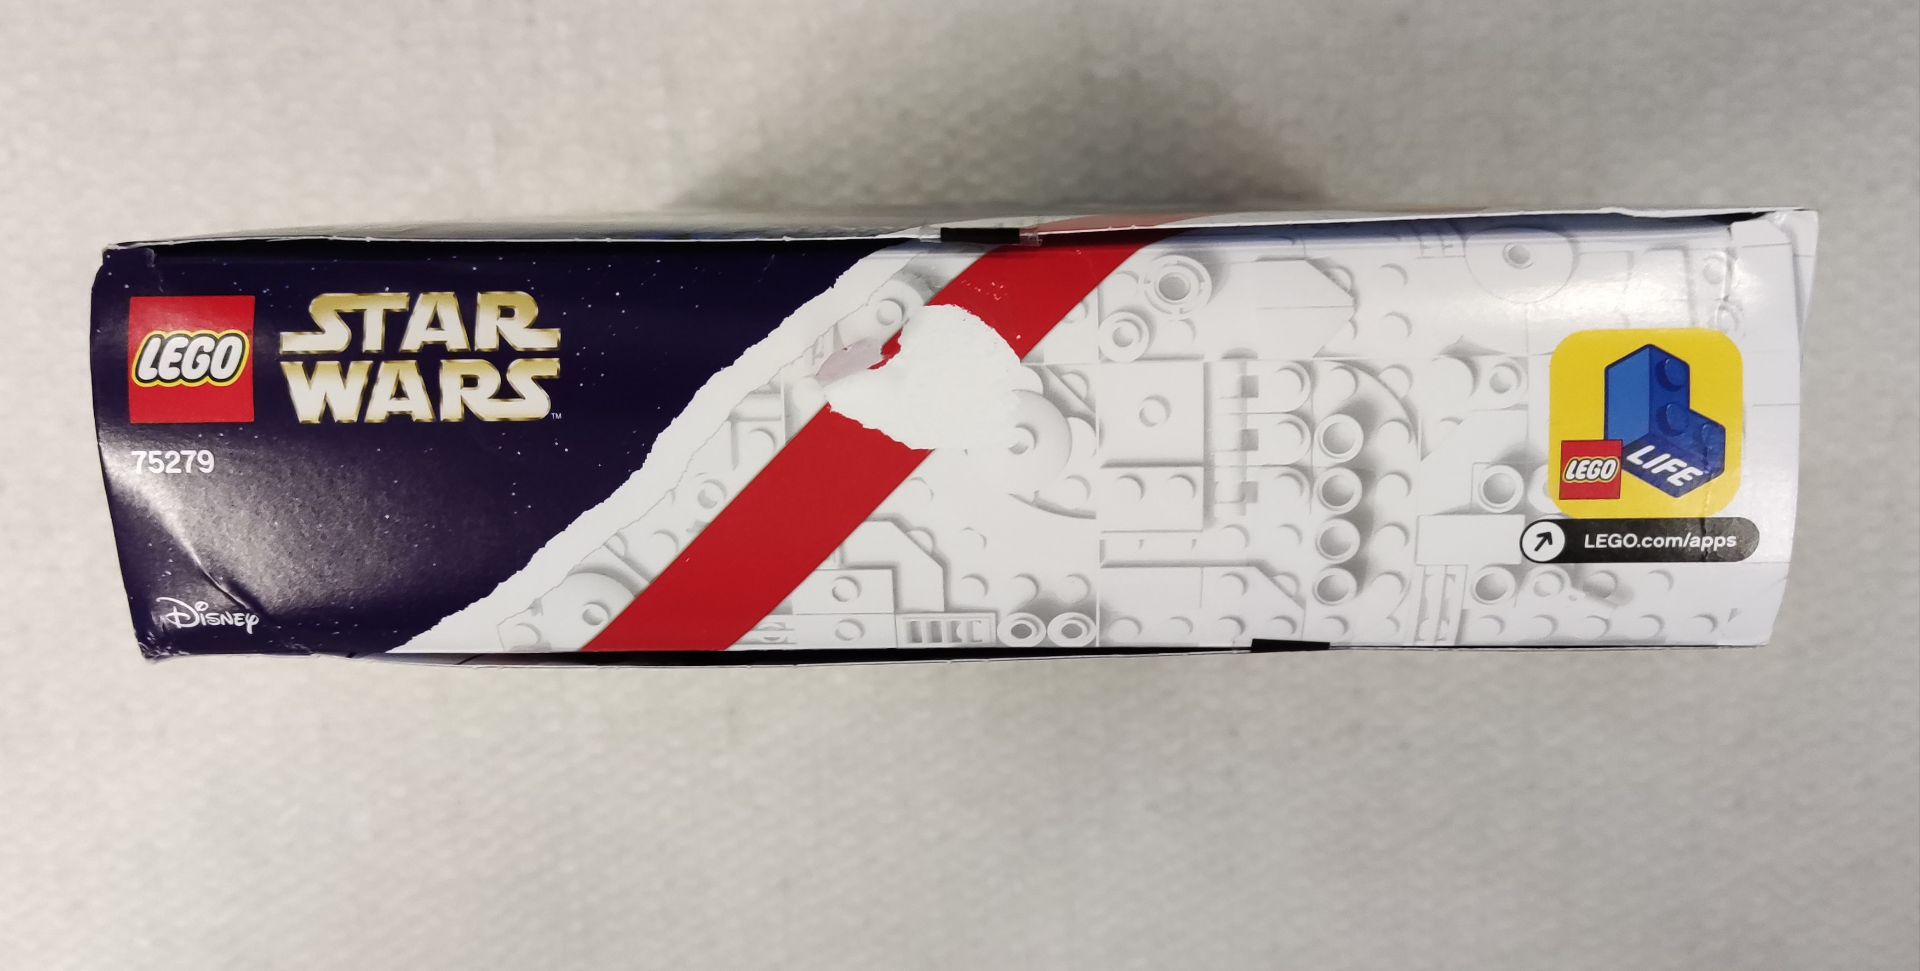 1 x Lego Star Wars The Skywalker Saga Advent Calender - Model 75279 - New/Boxed - Image 5 of 9